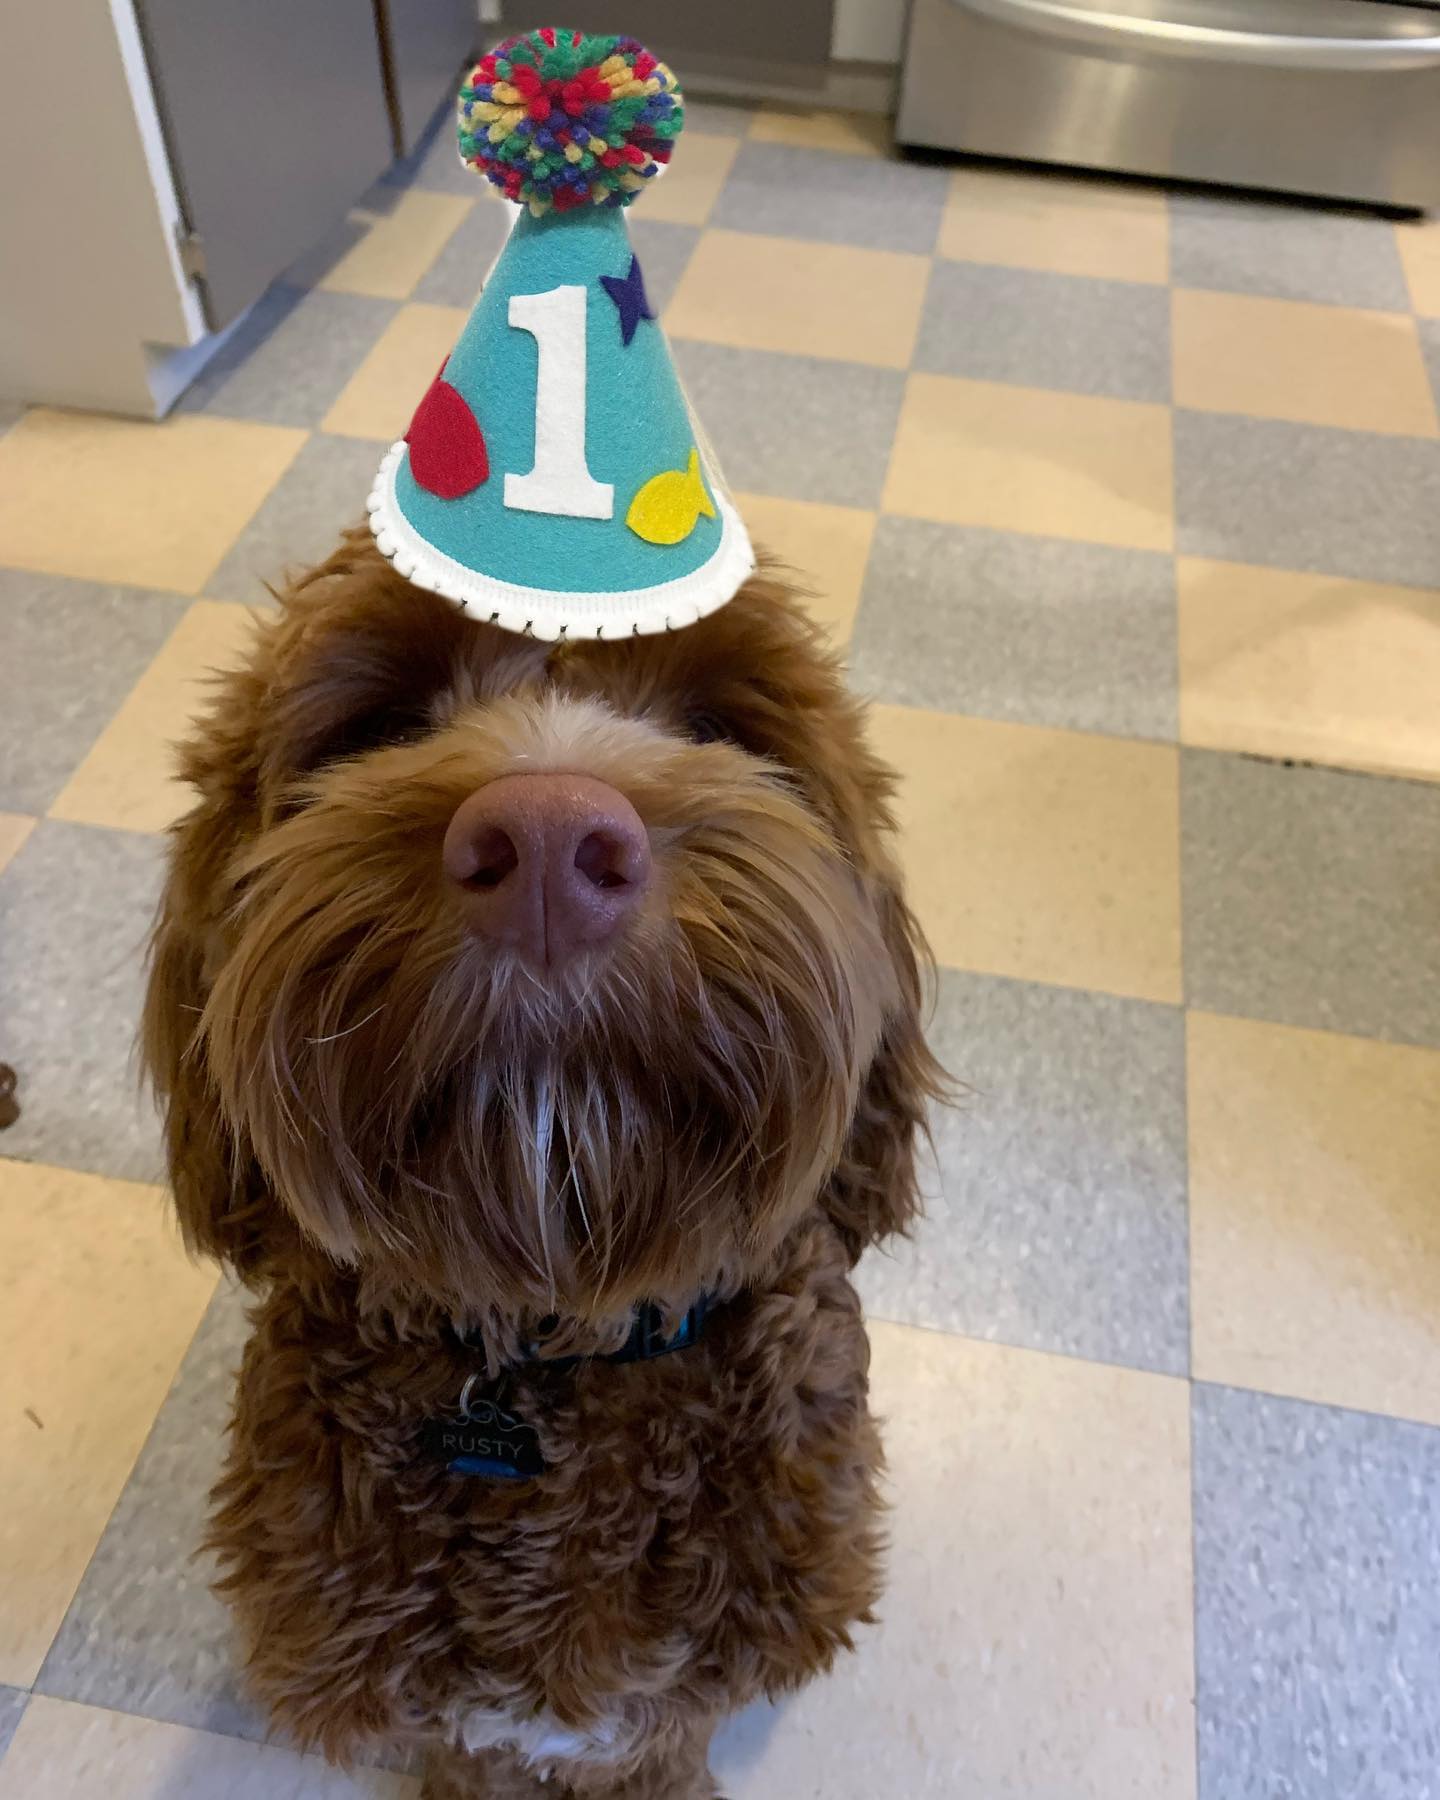 The dood turned 1! Happy birthday @rusty.the.dog.yyj #labradoodle #rustydoodle